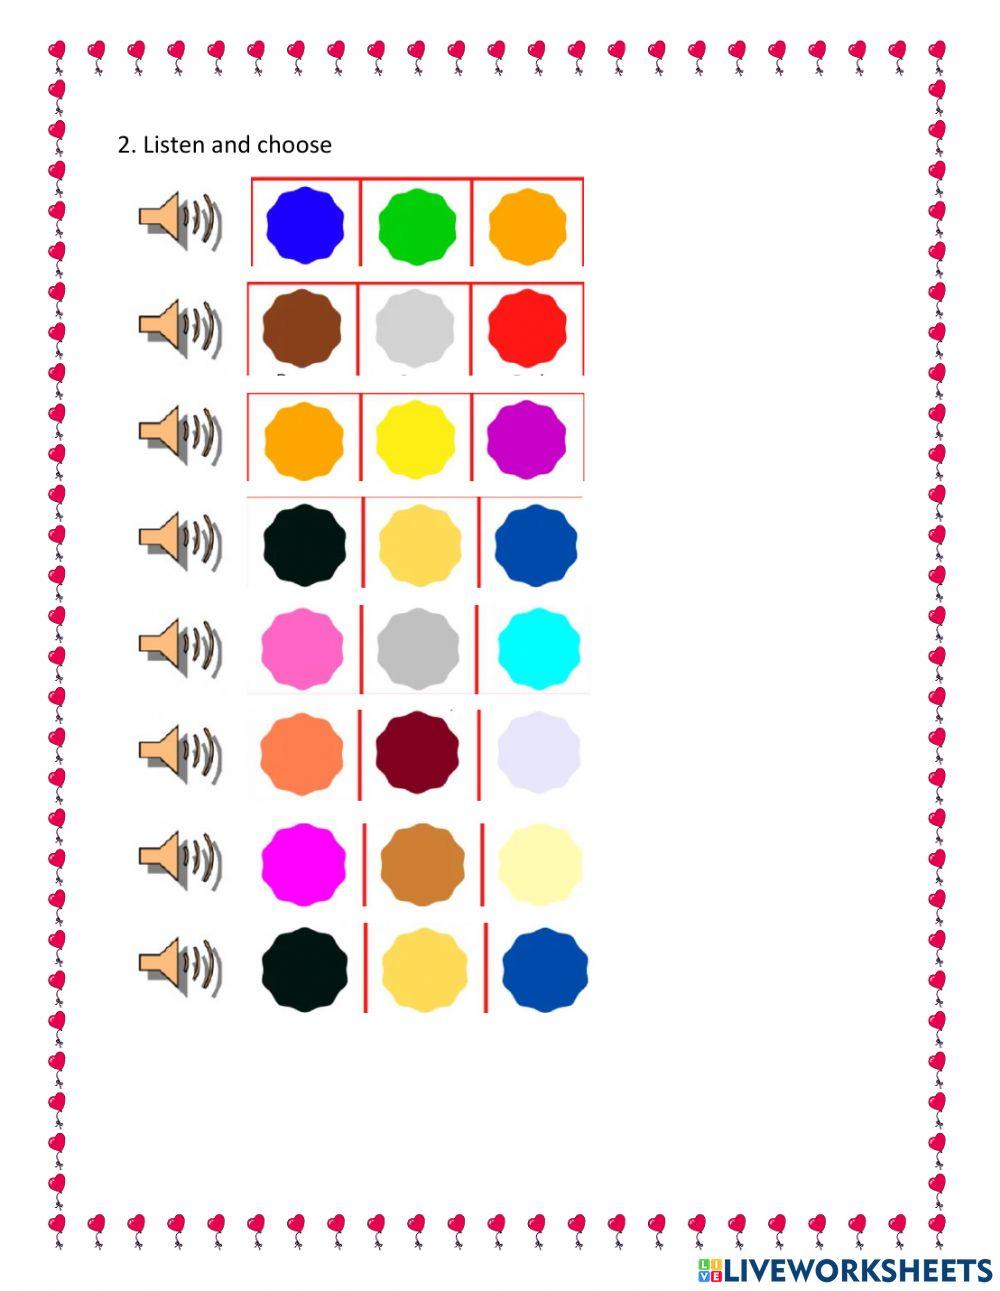 Worksheet 6 - Colors